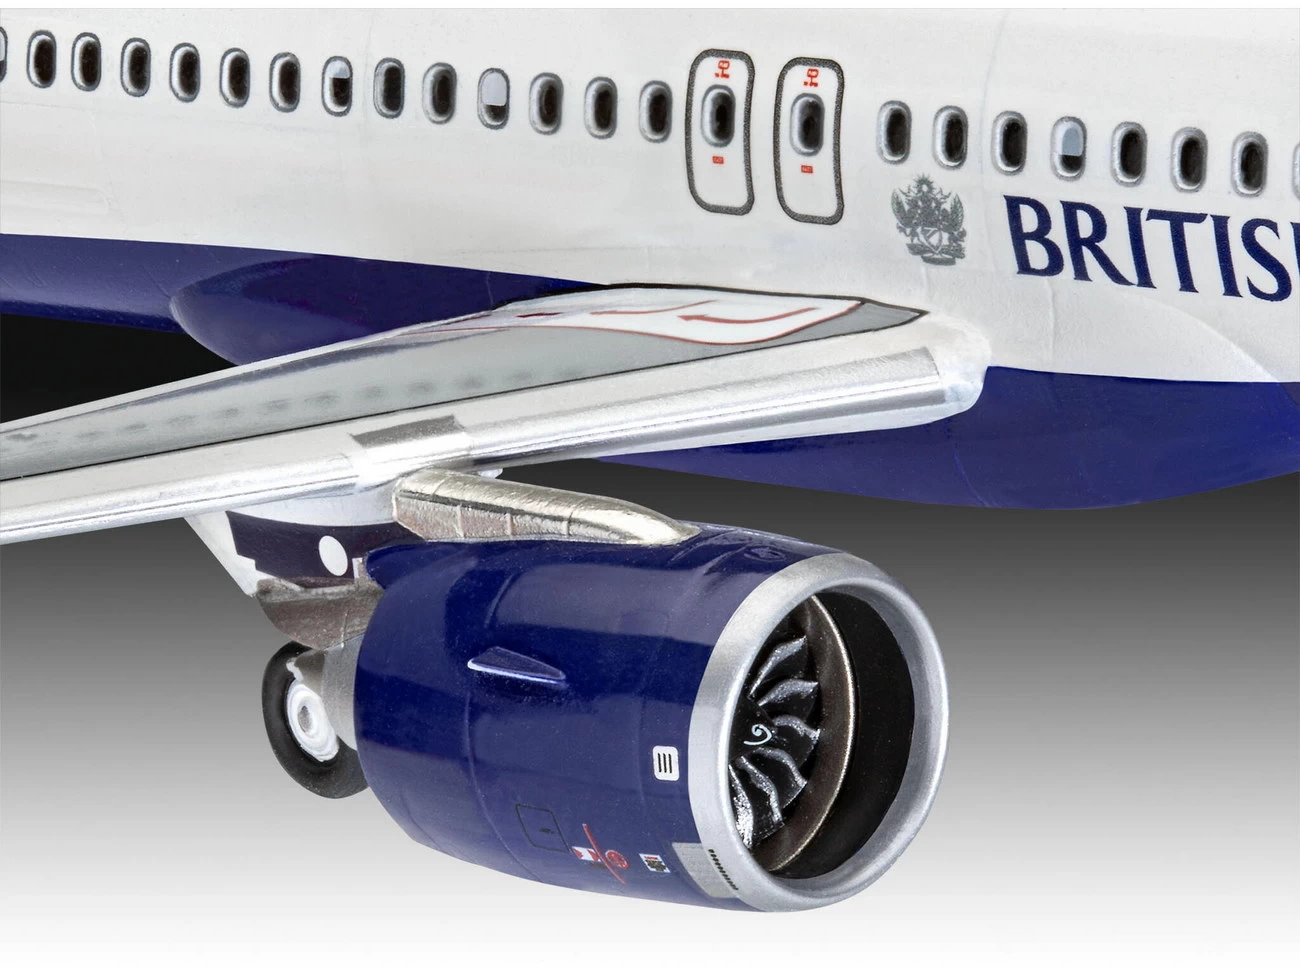 Revell 03840 - Airbus A320 neo British Airways - Flugzeug Modell